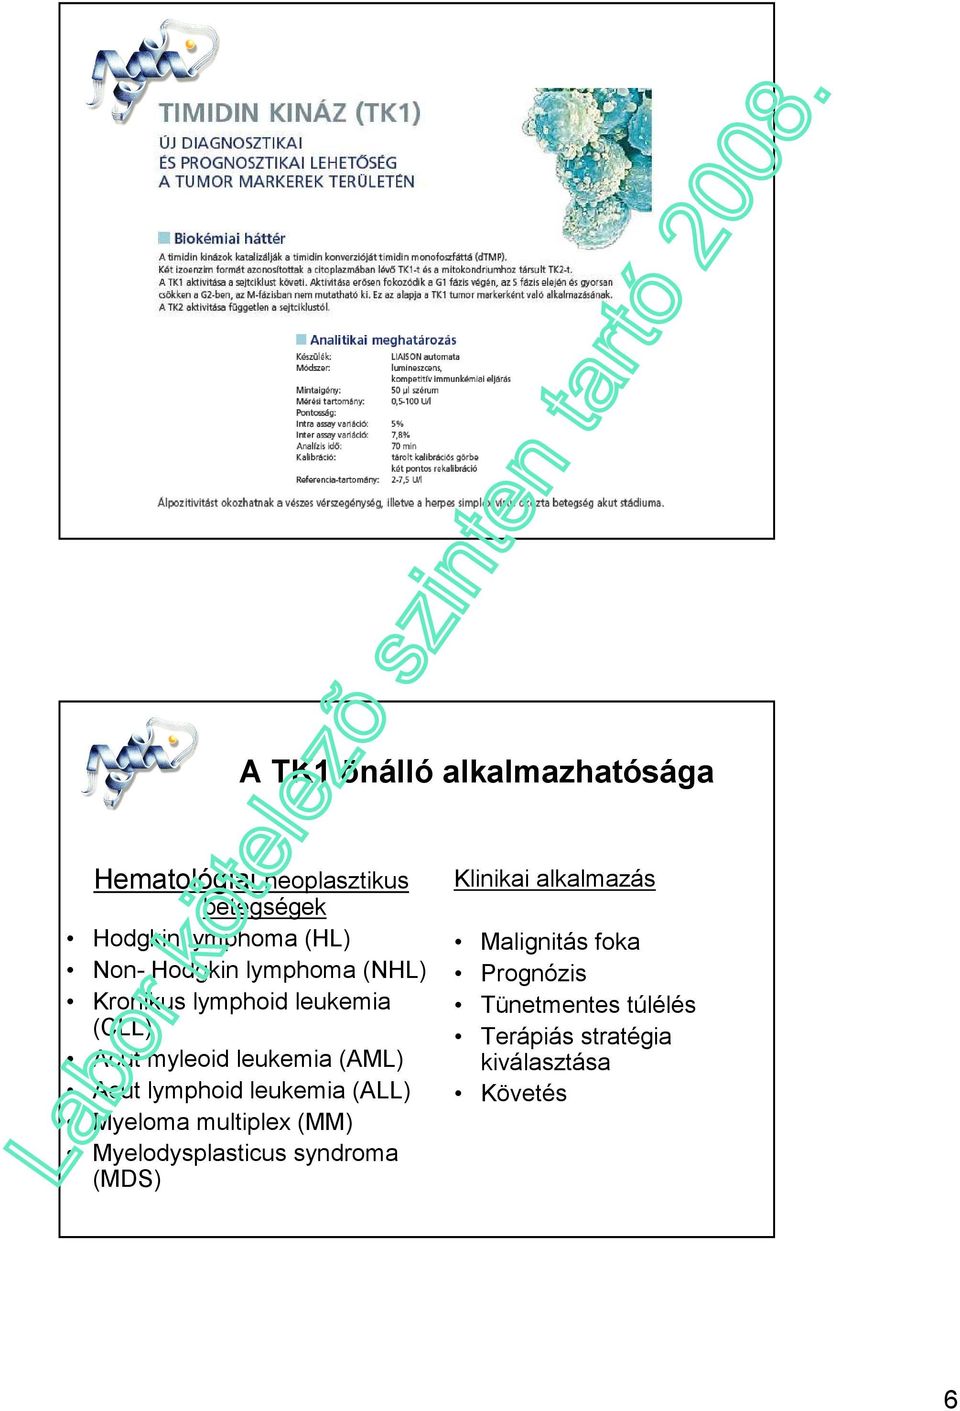 lymphoid leukemia (ALL) Myeloma multiplex (MM) Myelodysplasticus syndroma (MDS) Klinikai